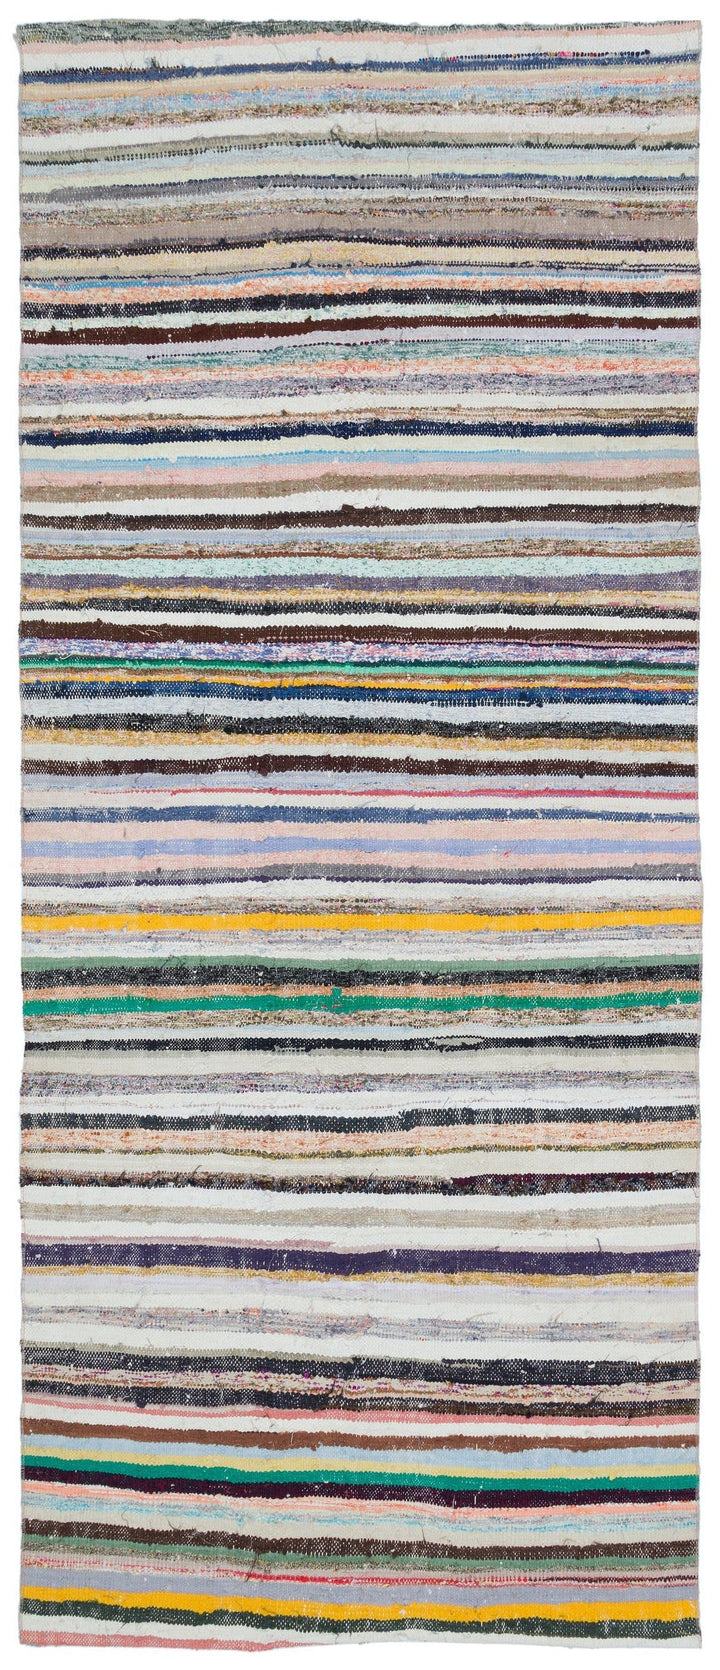 Cretan Beige Striped Wool Hand-Woven Rug 141 x 334